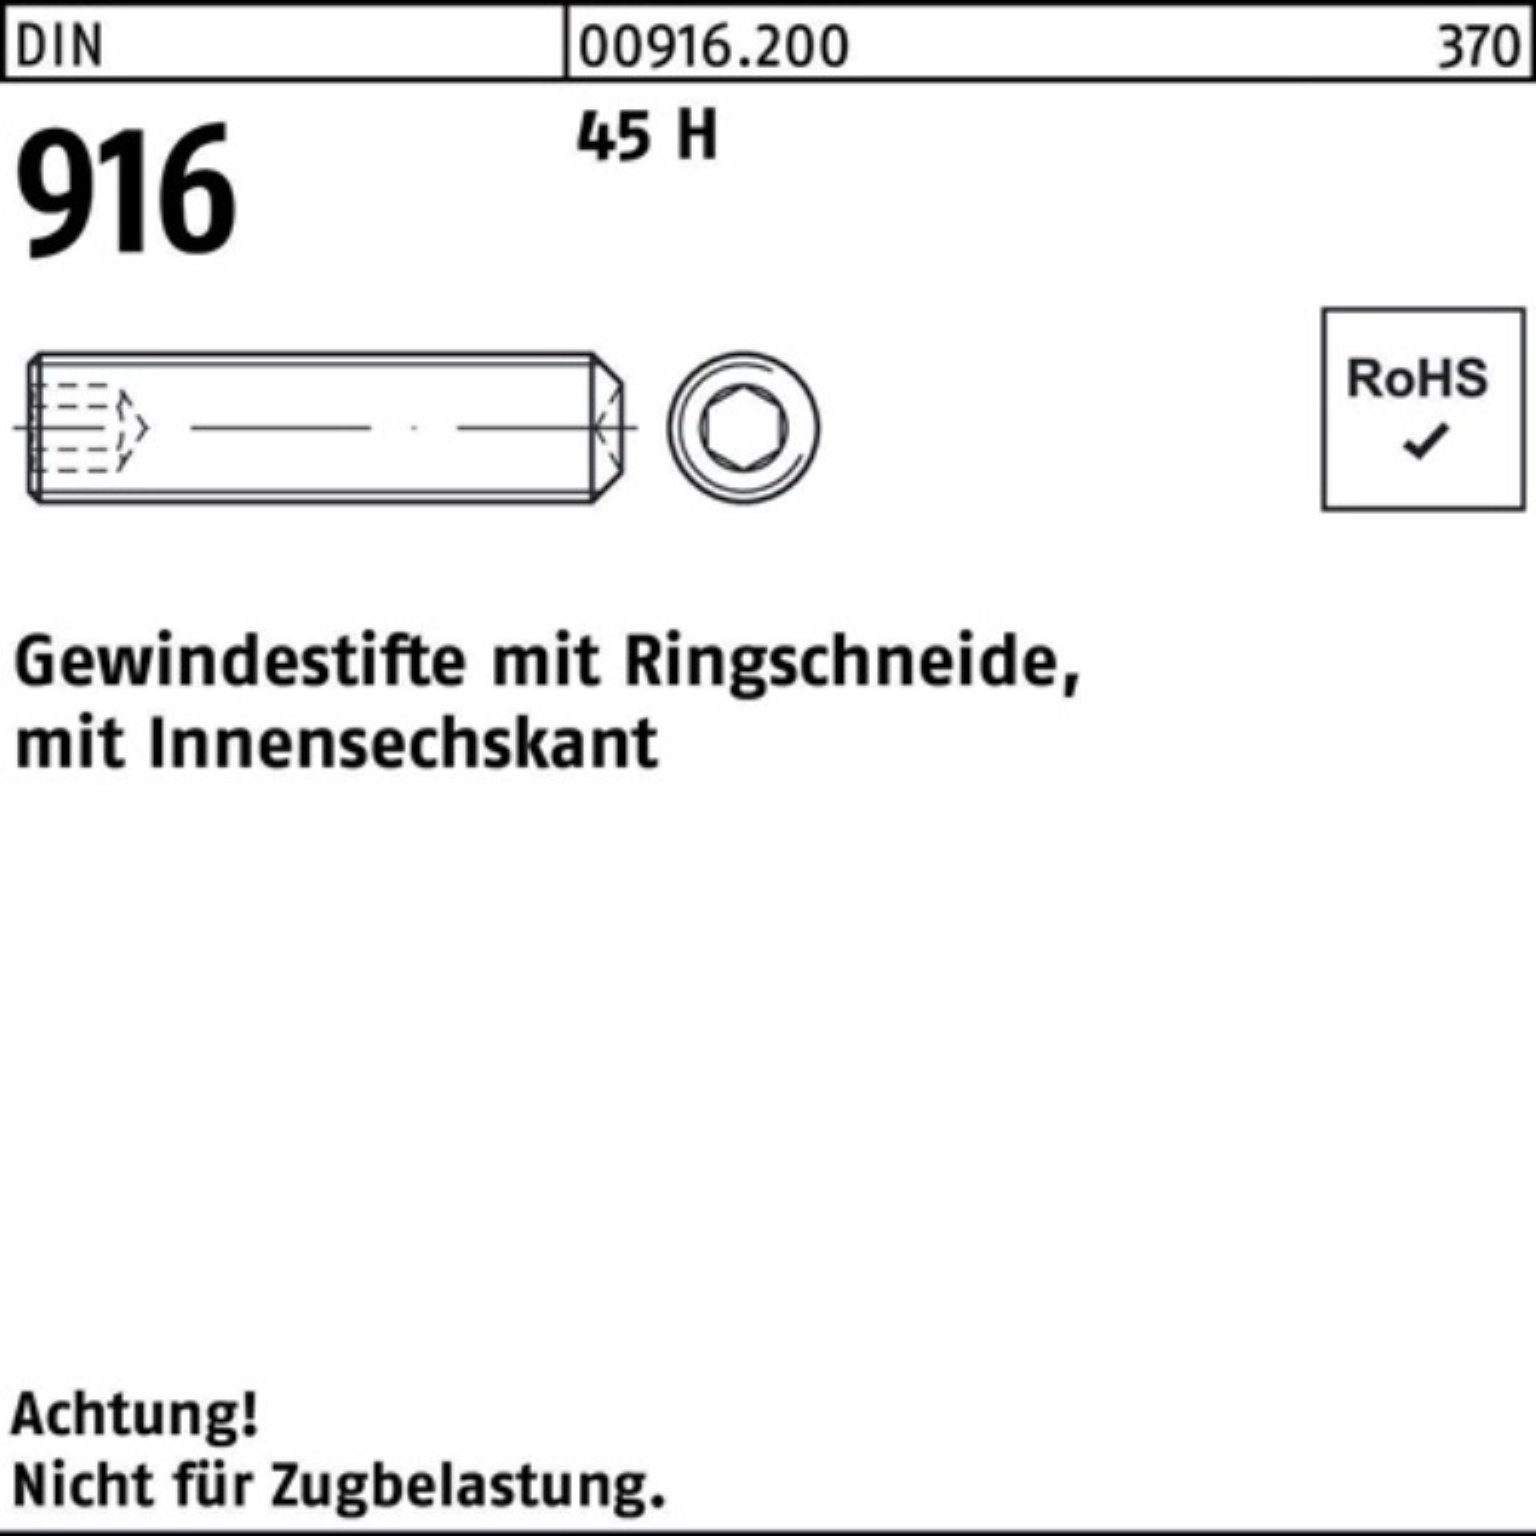 Reyher Gewindebolzen 100er Pack Gewindestift DIN 916 Ringschn./Innen-6kt M16x 55 45 H 50 St